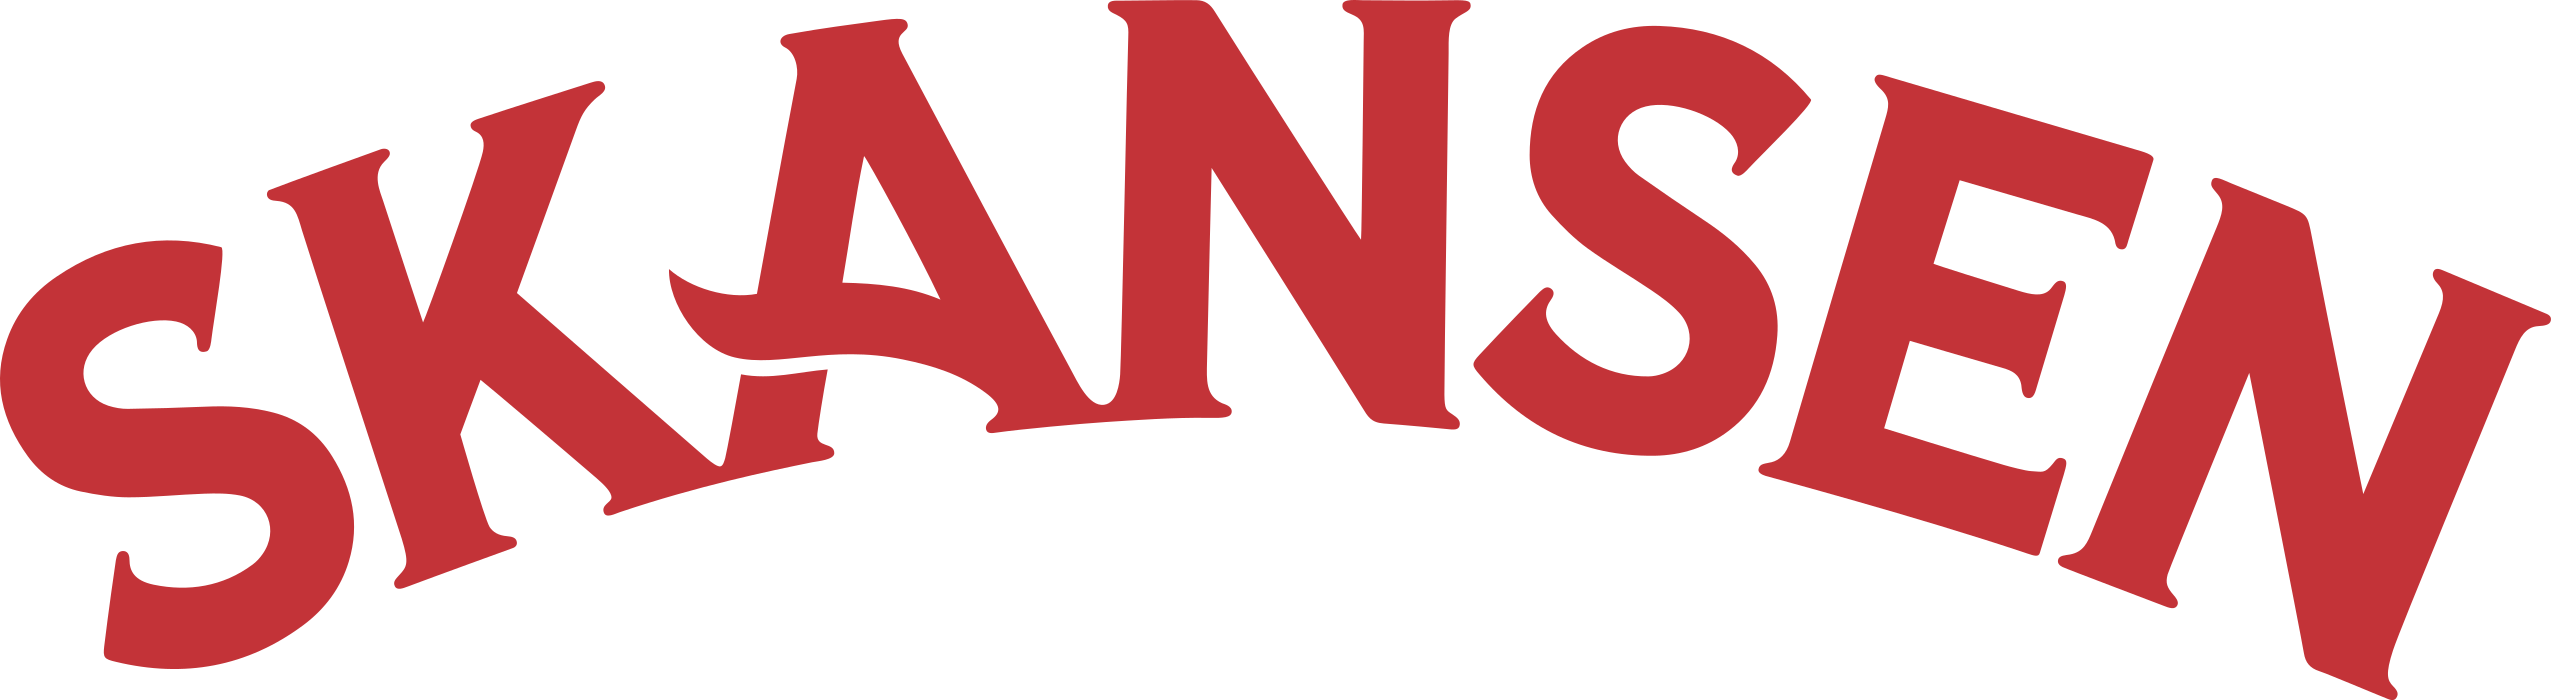 Skansen Logo